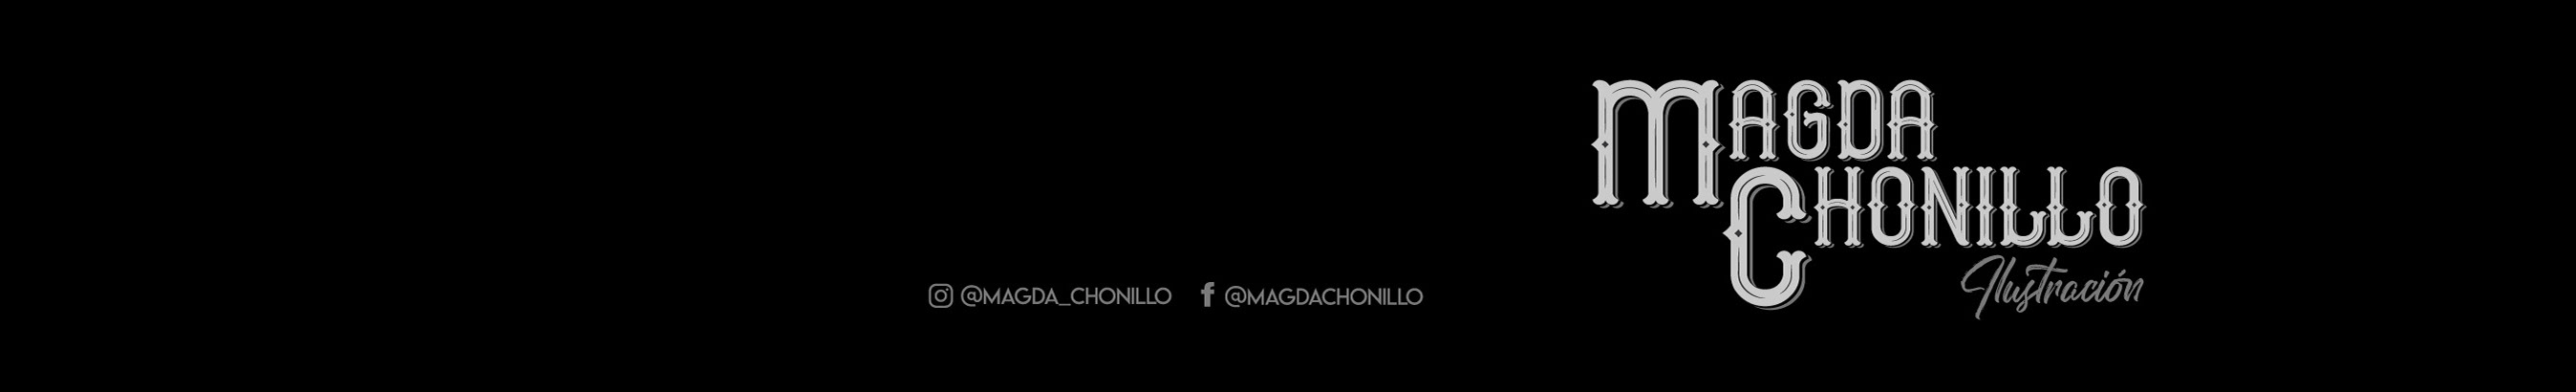 Magda Chonillo's profile banner